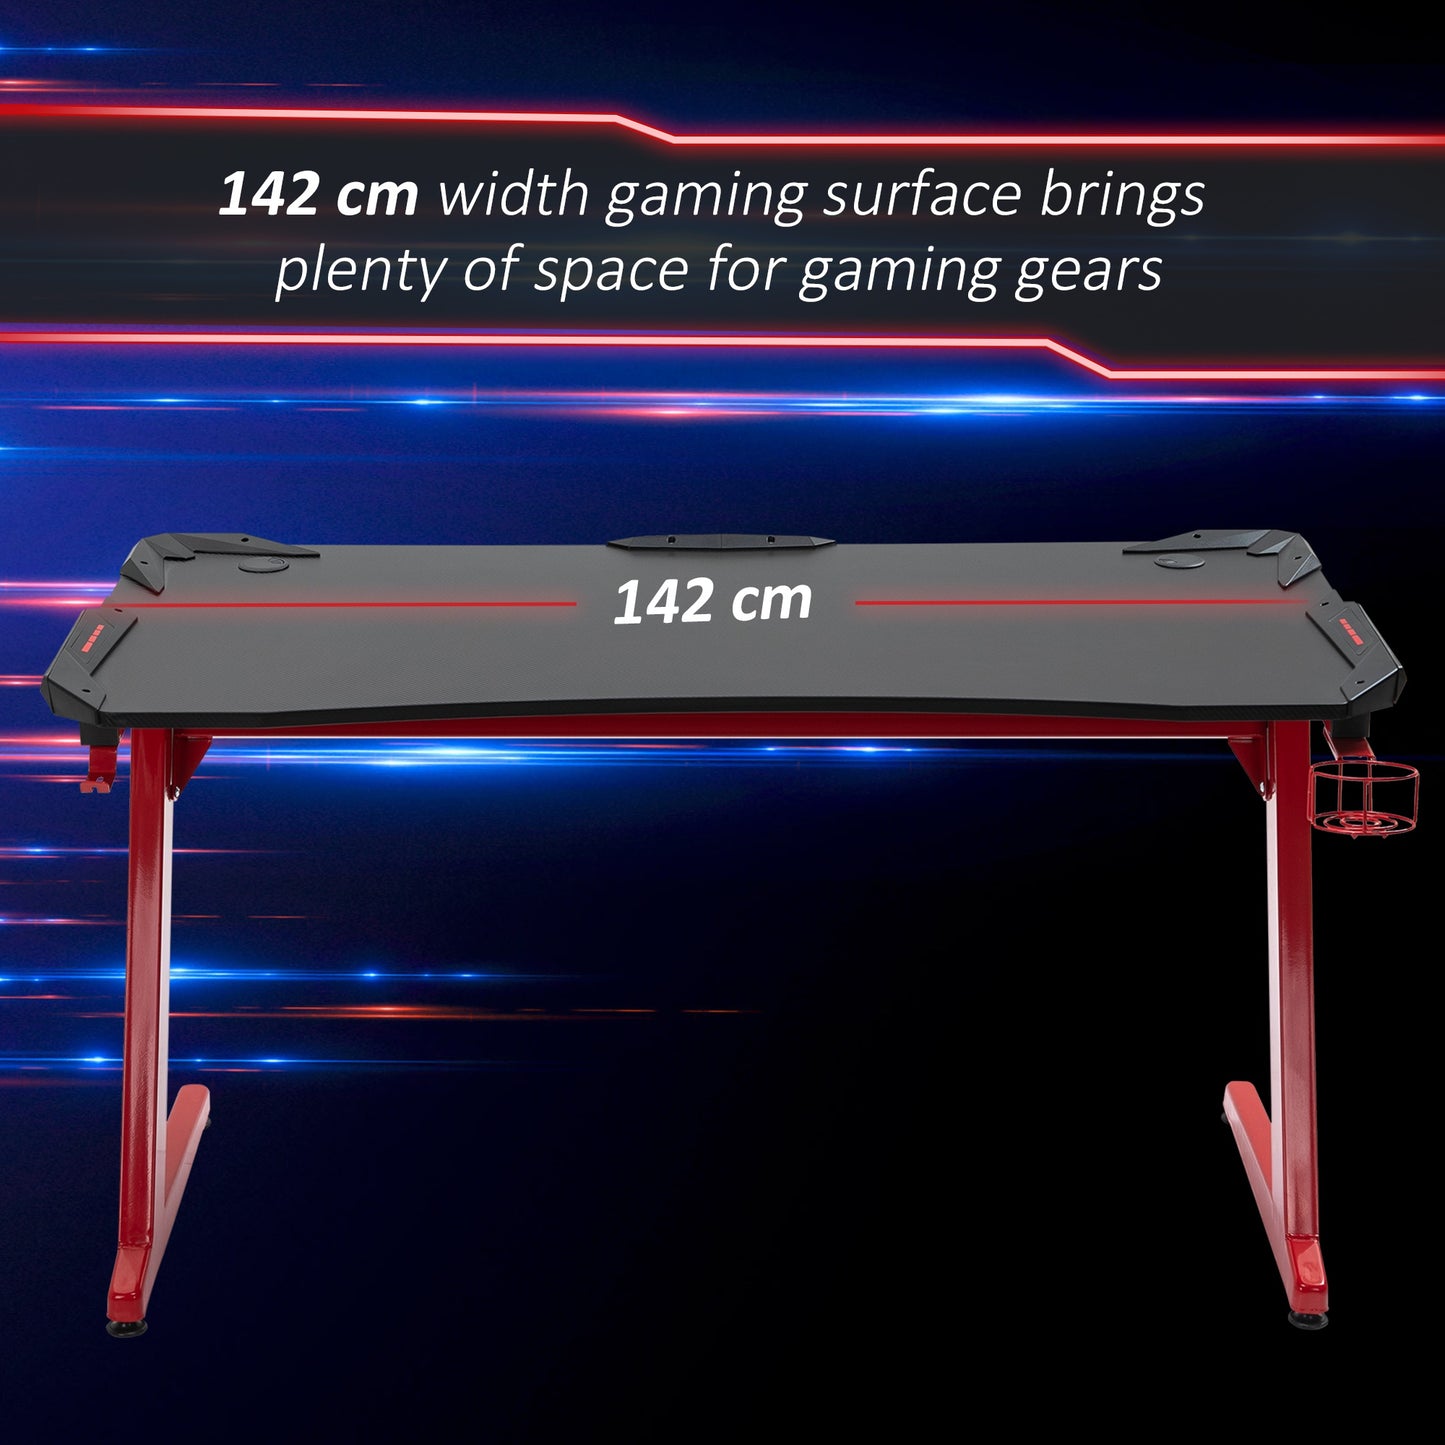 HOMCOM Computer Desk Gaming Desk Writing Table w/cup holder Headphone hook Red/Black